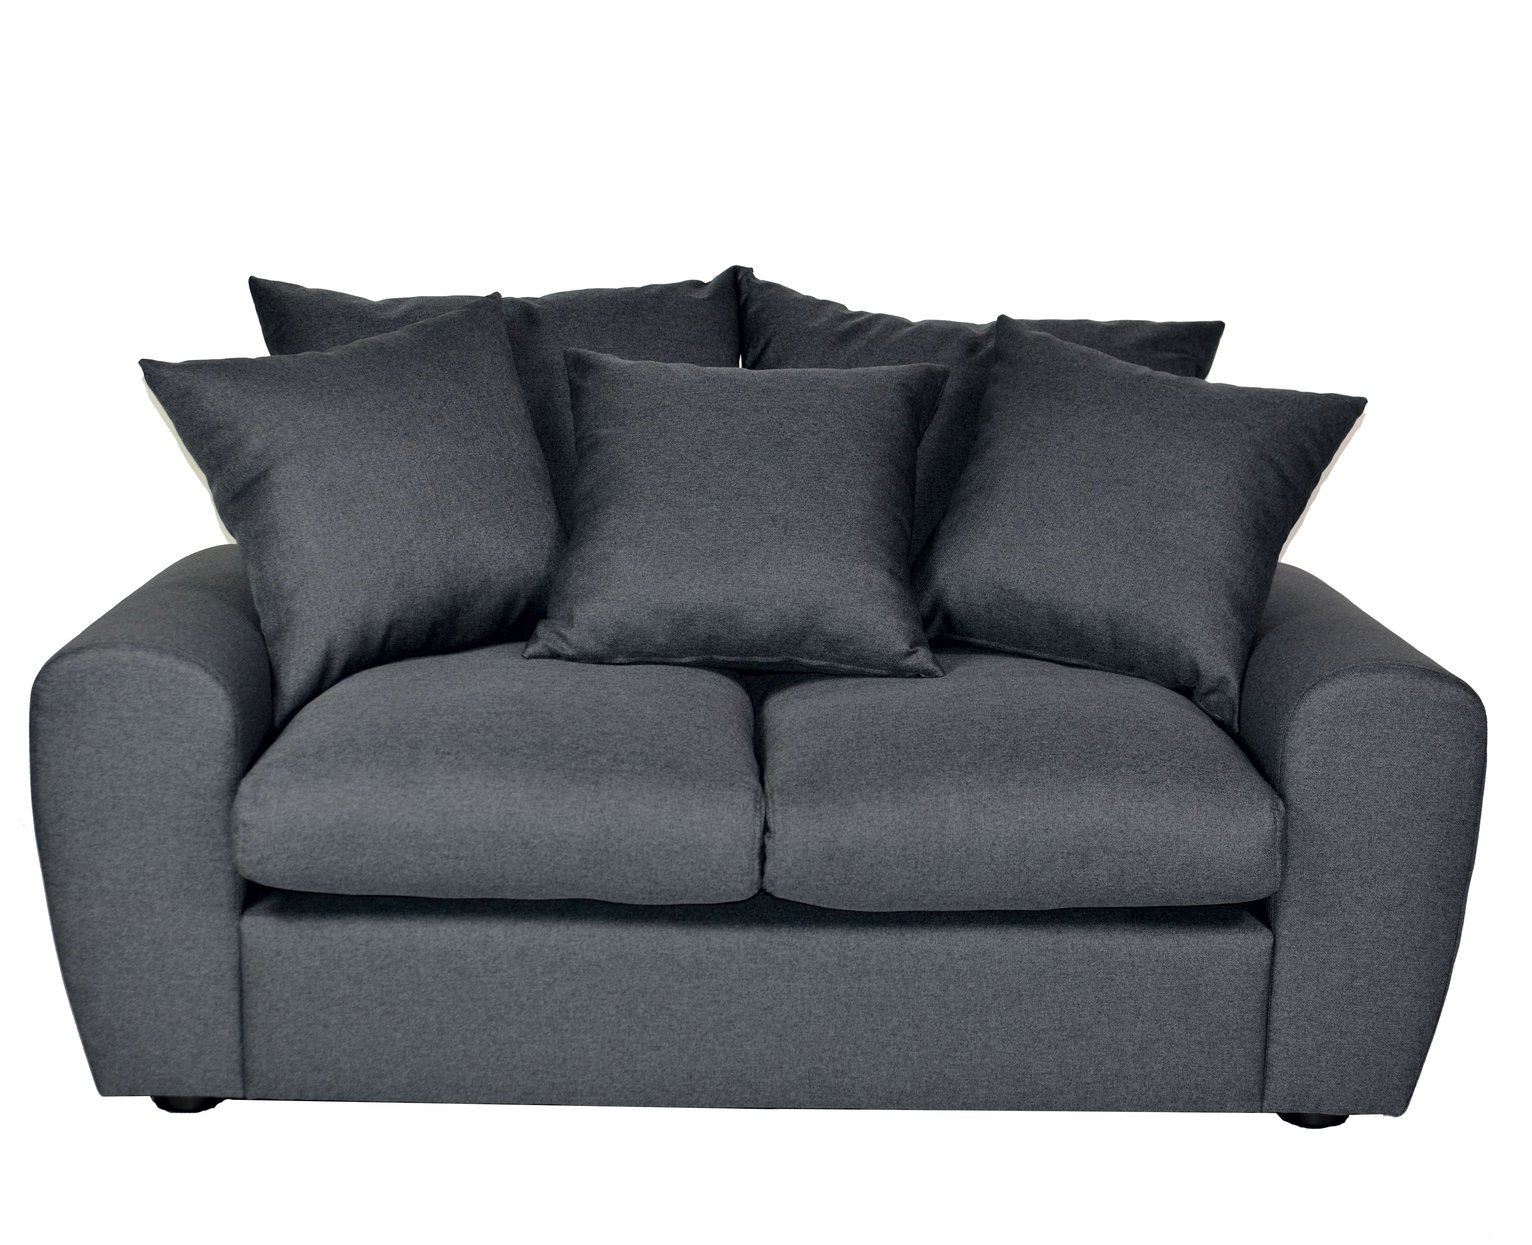 Argos Home Billow 2 Seater Fabric Sofa - Grey